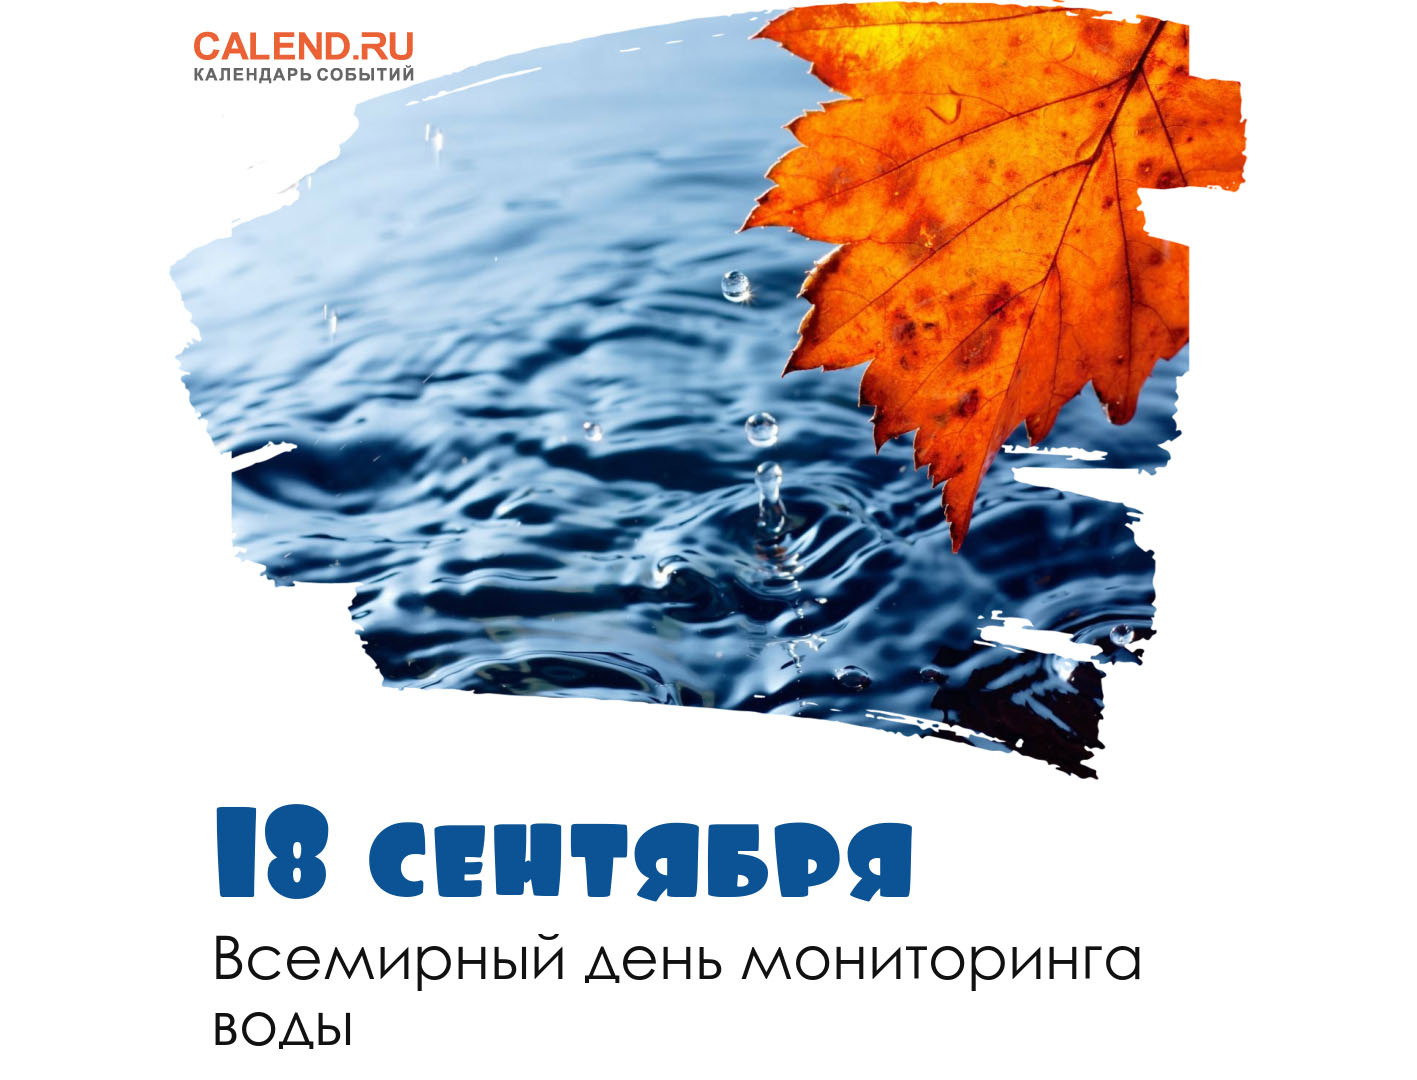 https://www.calend.ru/calendar/wp-content/uploads/18-sentyabrya-1-1.jpg